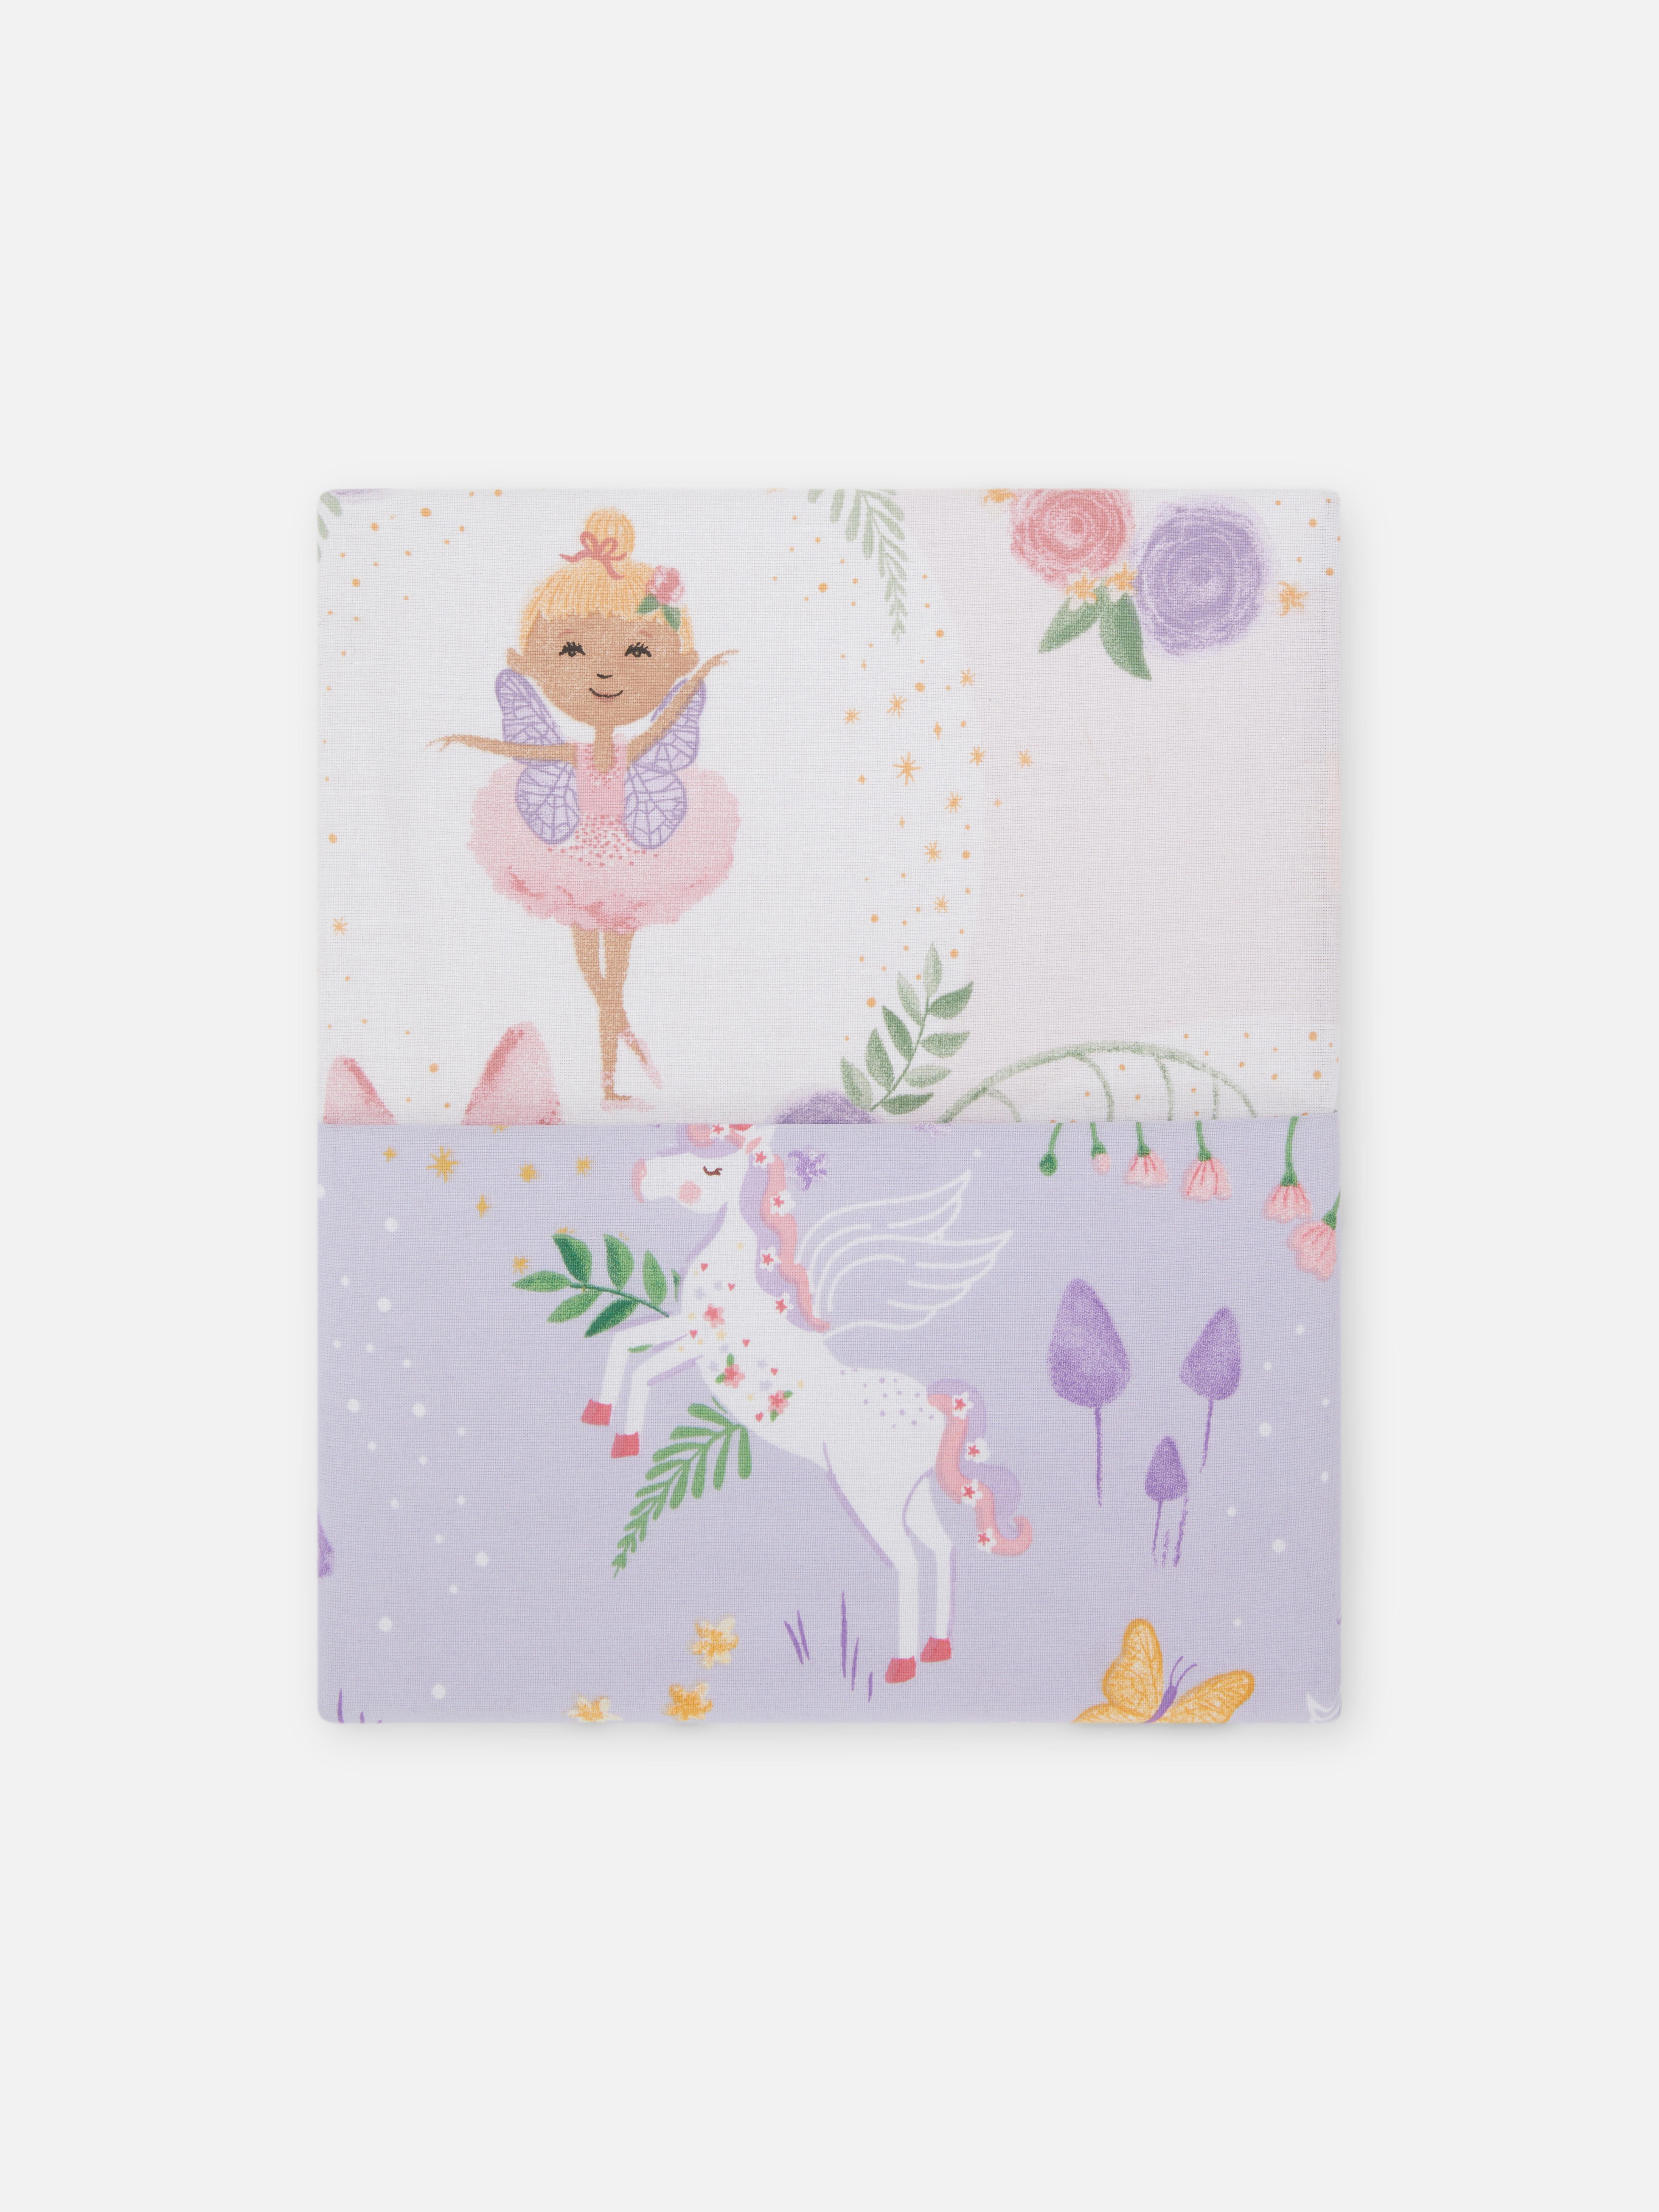 Multicoloured Fairy Double Duvet Cover Set